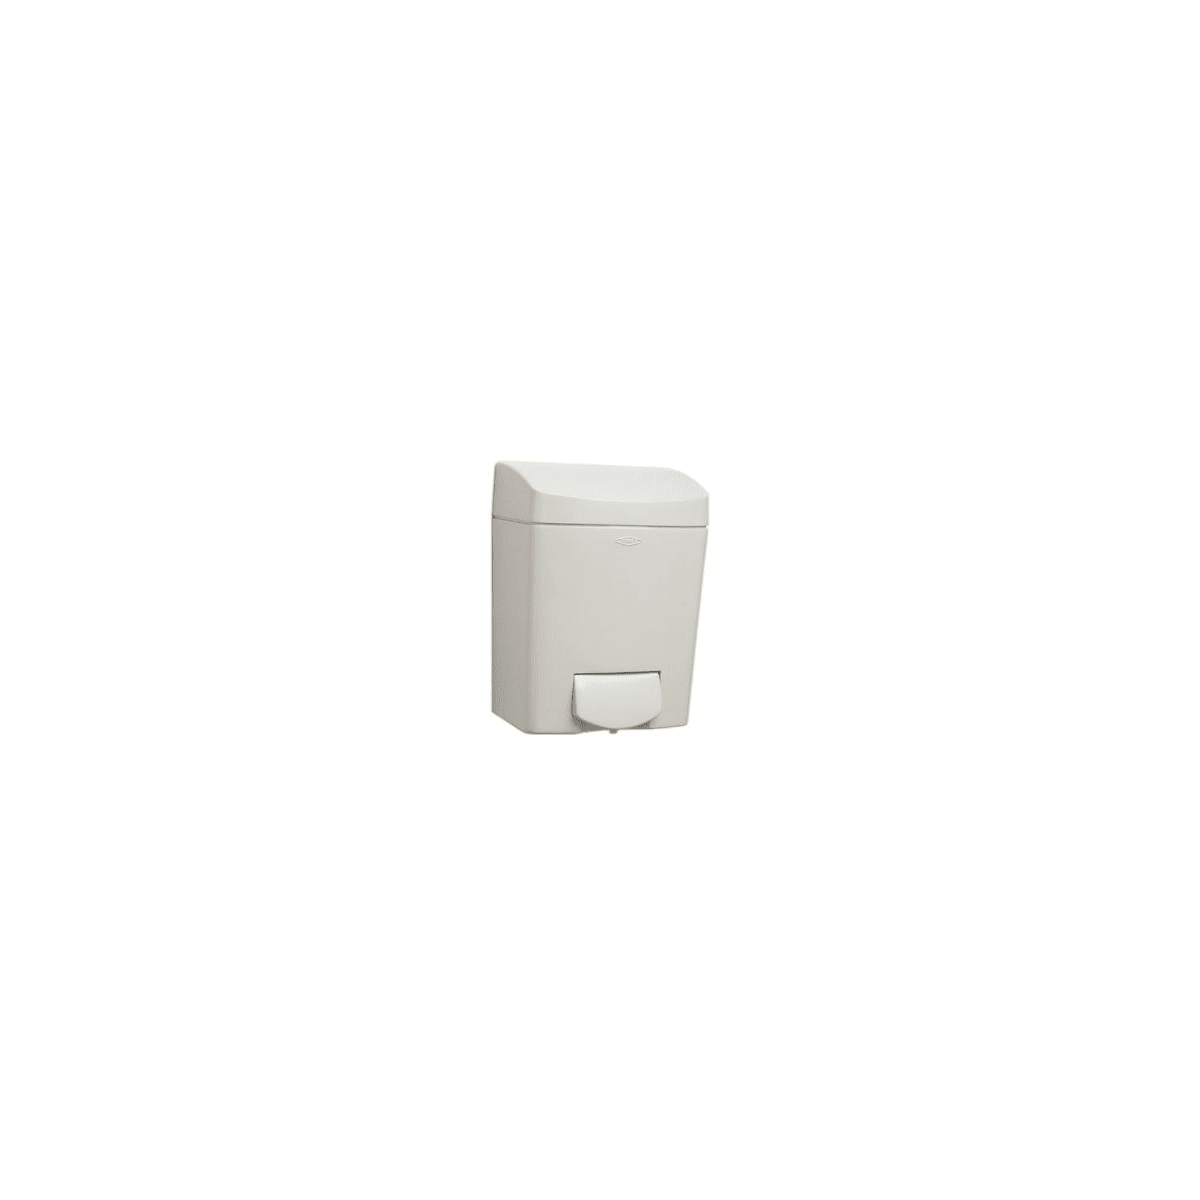 Details about   Bobrick B-5050 Matrix Series Wall Mount Manual Soap Dispenser in Grey 